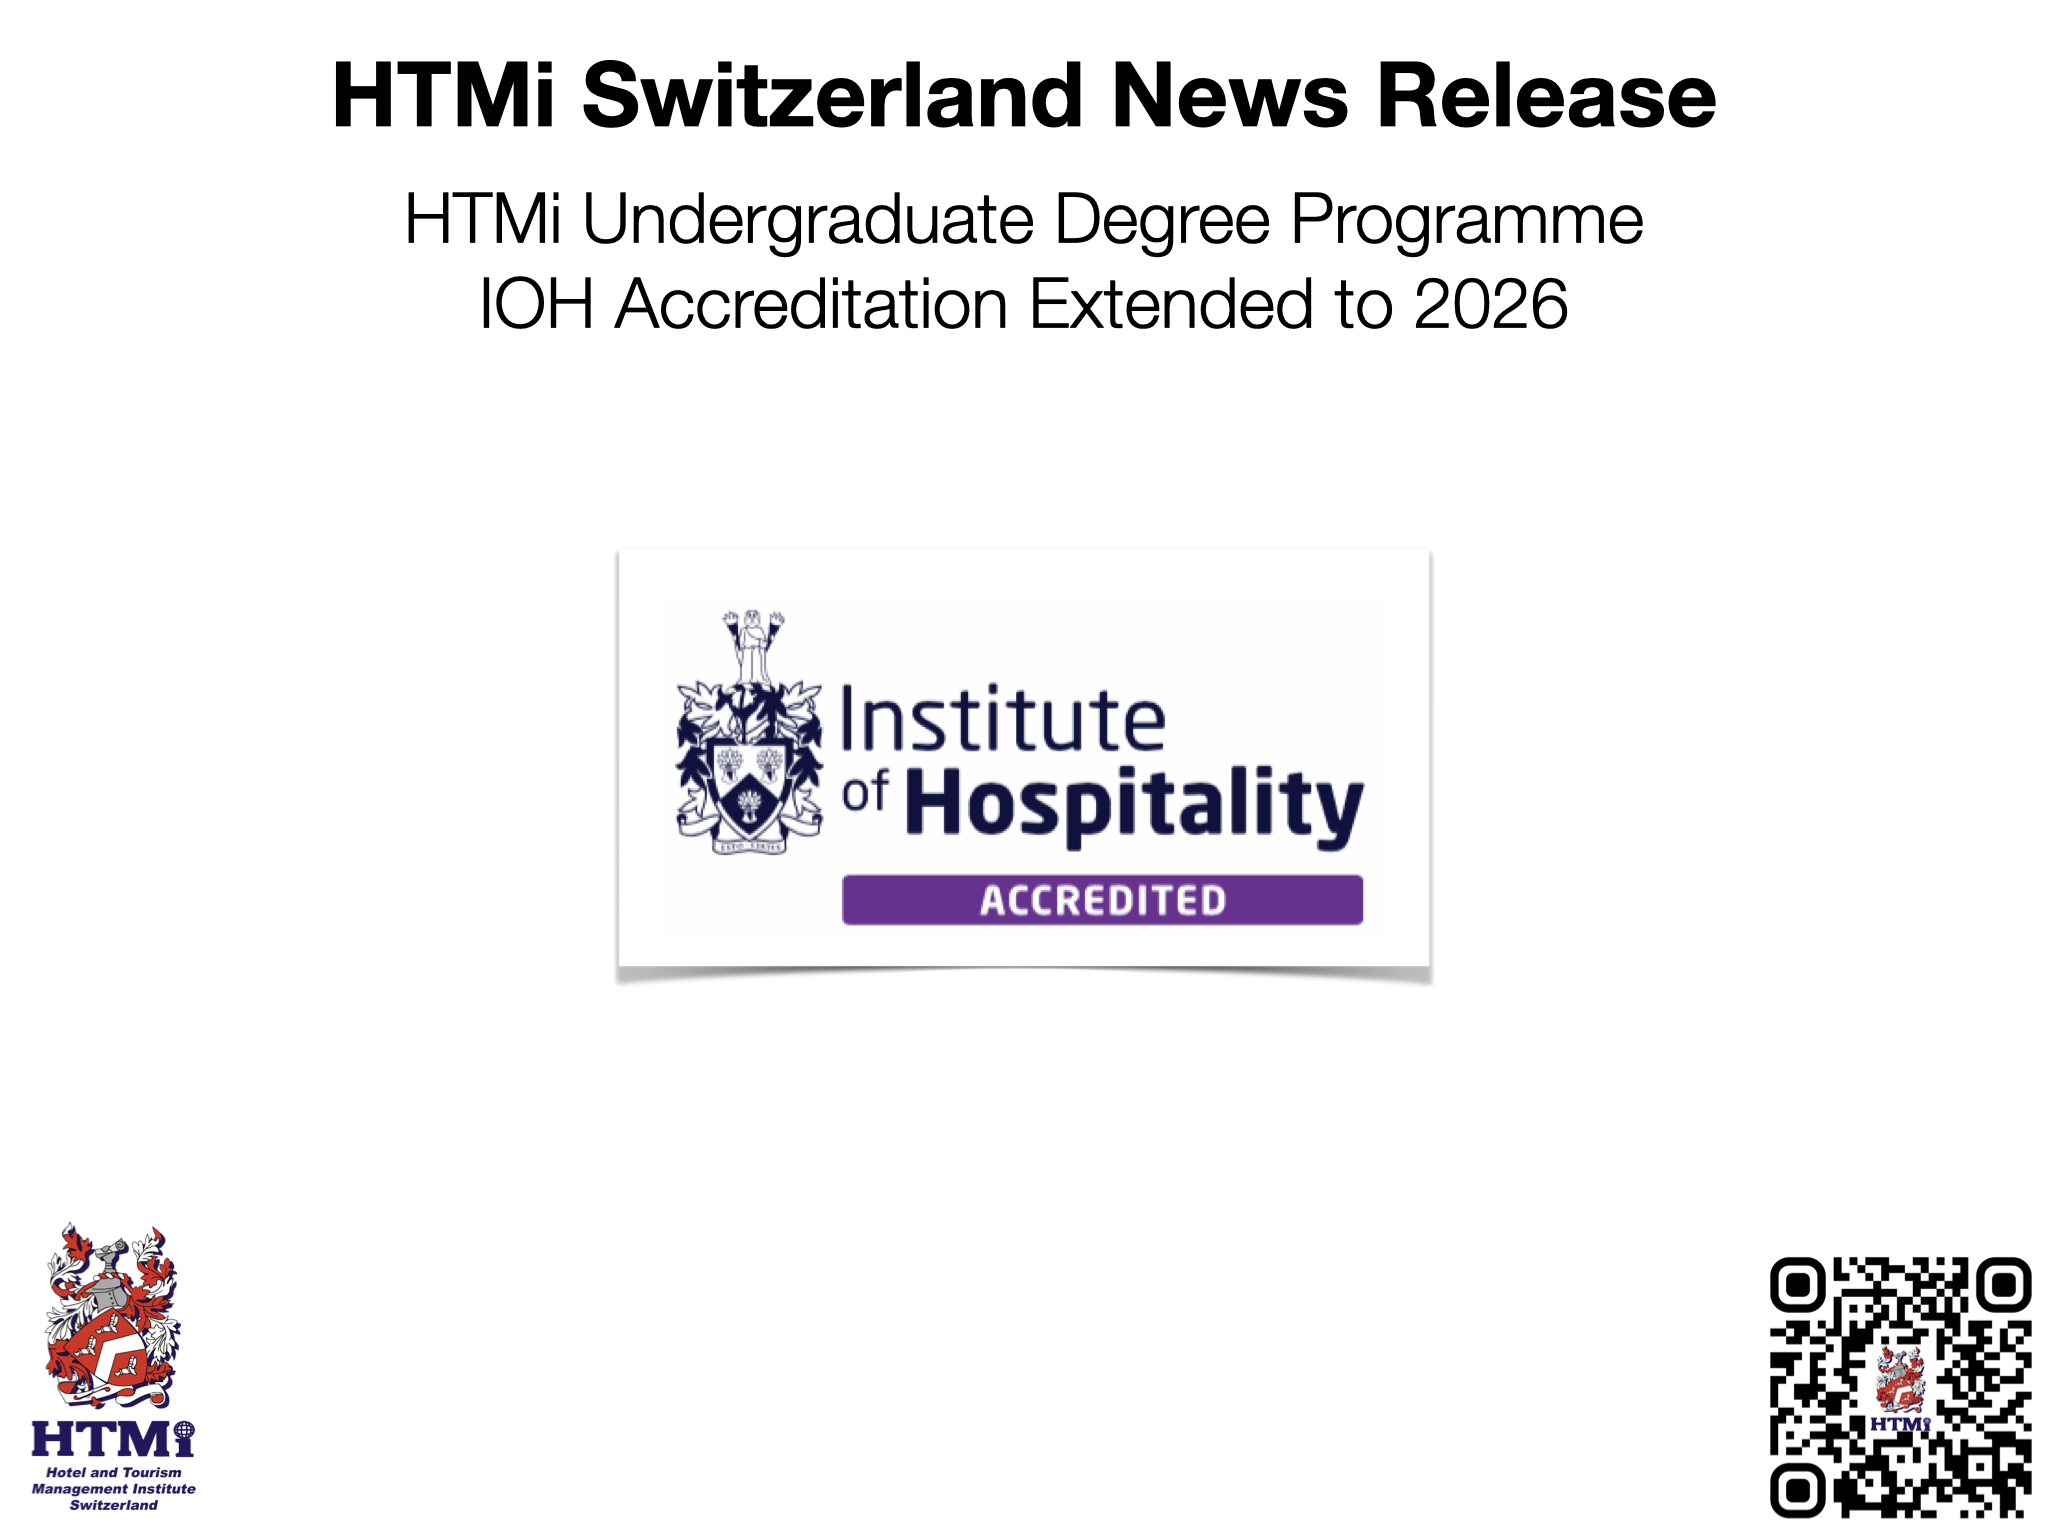 HTMi Undergraduate Degree Programme IOH Accreditation Extended to 2026 - HTMi Switzerland News Release